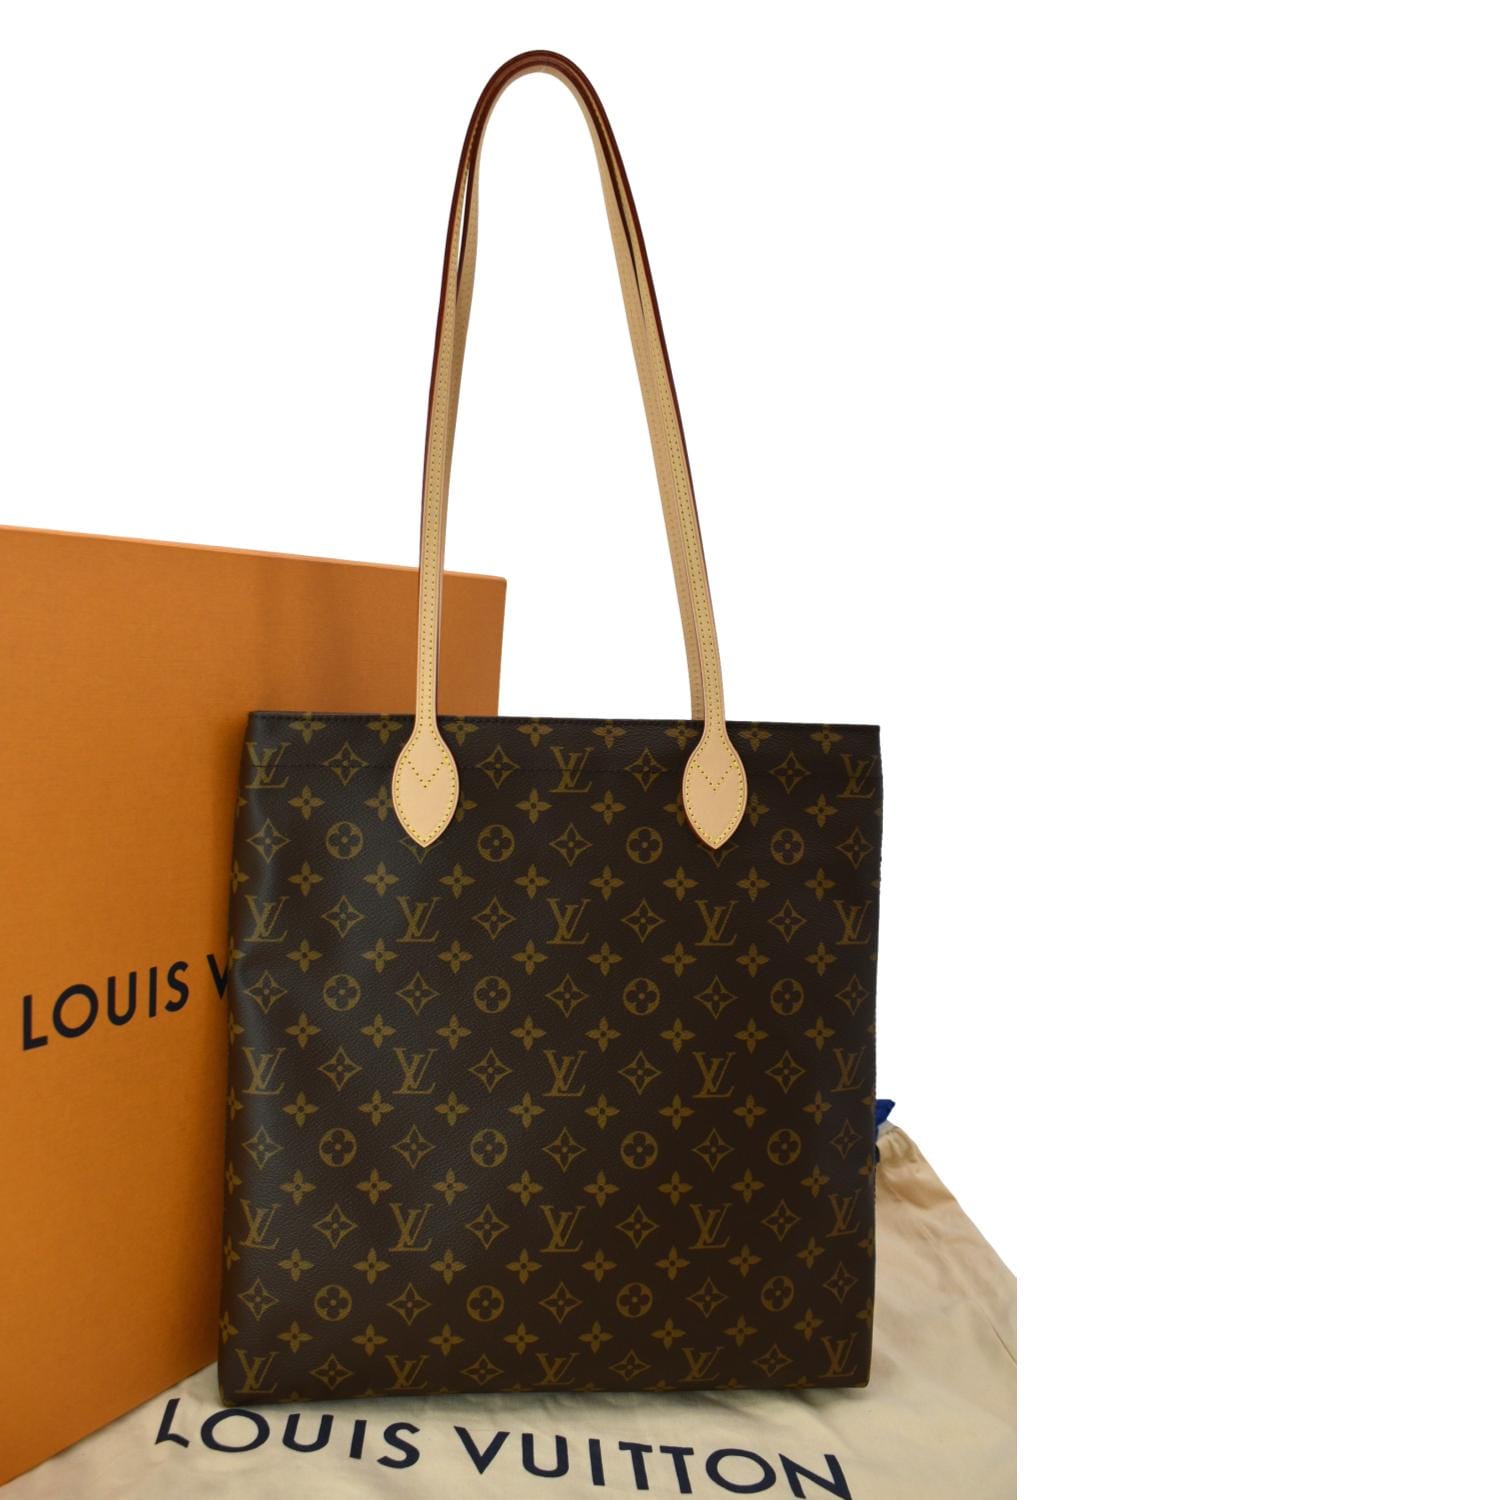 Imagine this lavish Louis Vitton bag on your shoulder 👜💭💝 Well